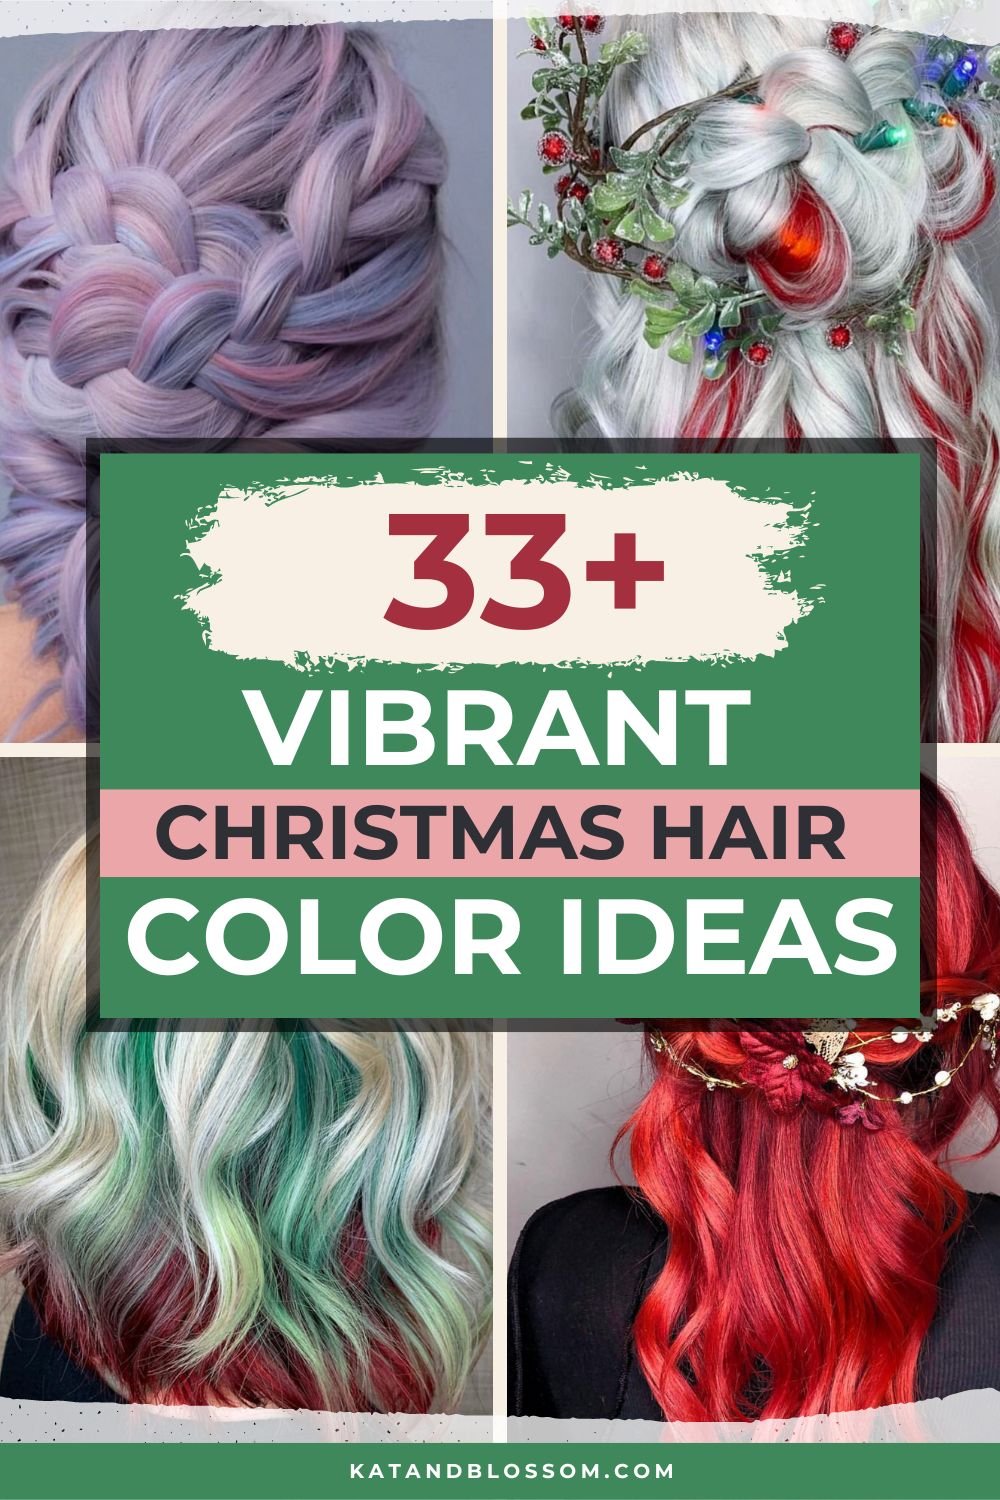 Best Colorful Christmas Hair Colors Ideas Pinterest Cover KB